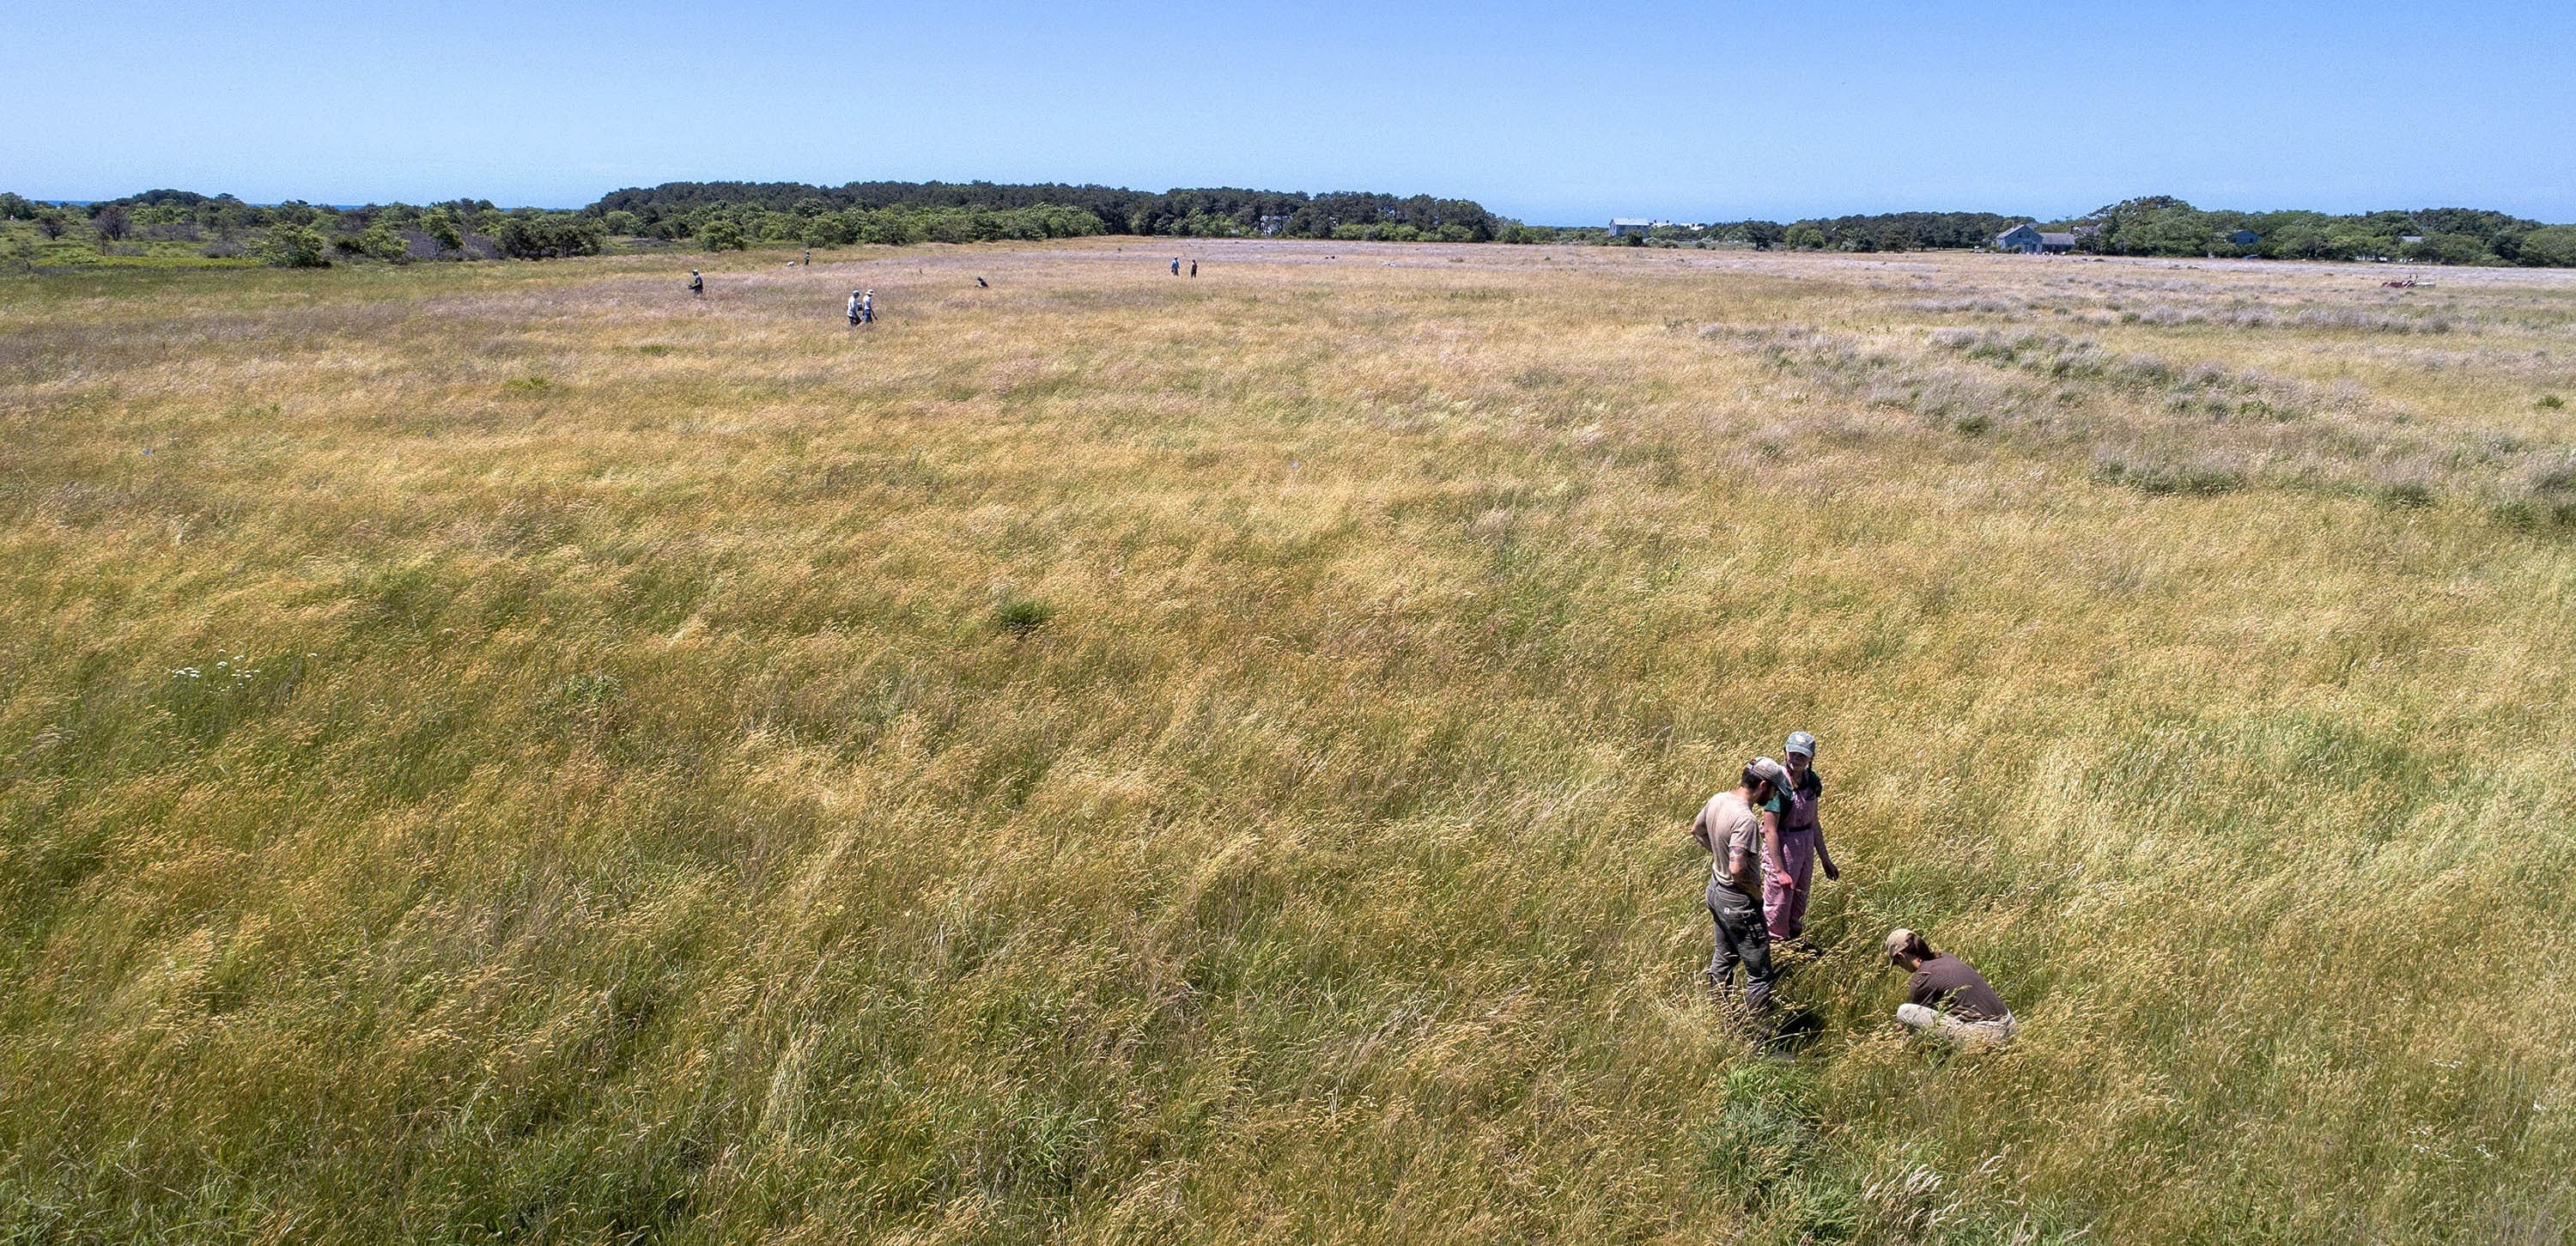 Volunteers work to restore native plants on the sandplain grasslands in Katama, on Martha's Vineyard. (Robin Lubbock/WBUR)